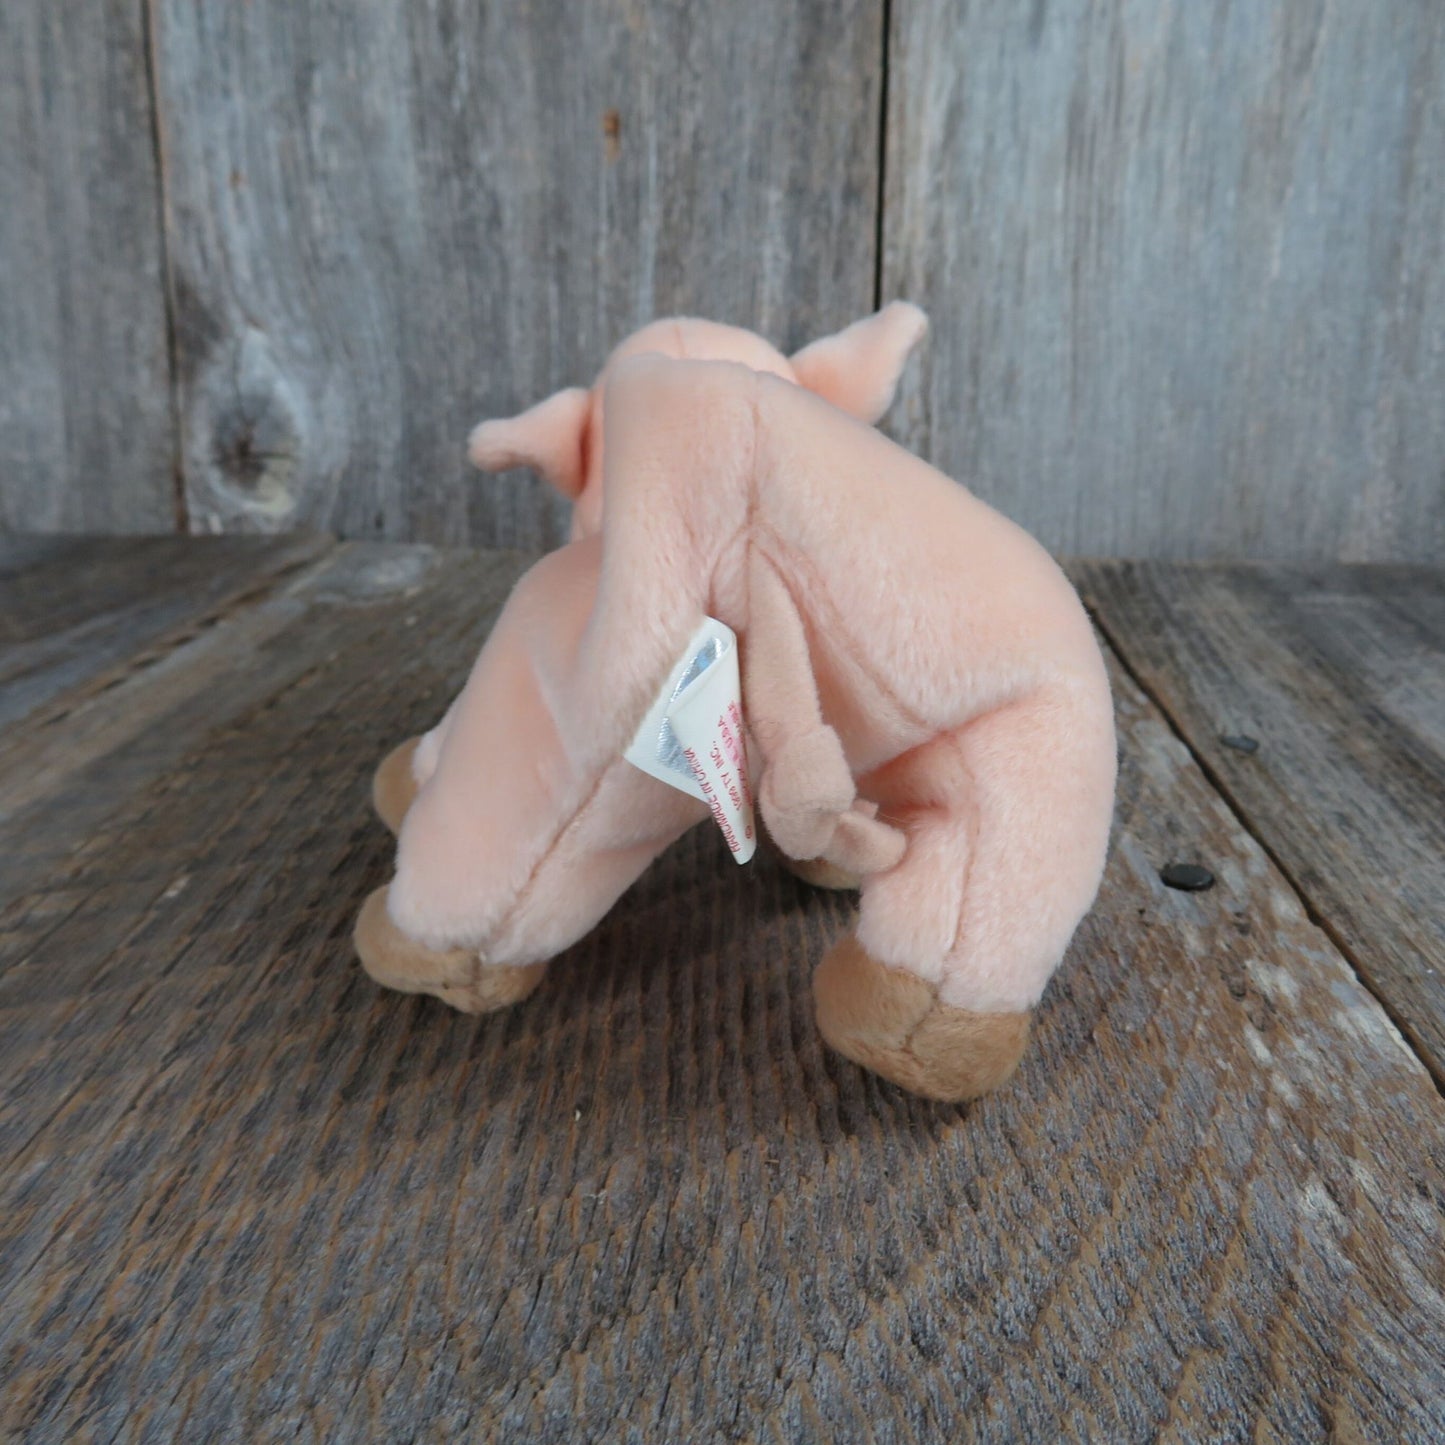 Vintage Pig Plush Beanie Baby Knuckles Bean Bag Stuffed Animal 1999